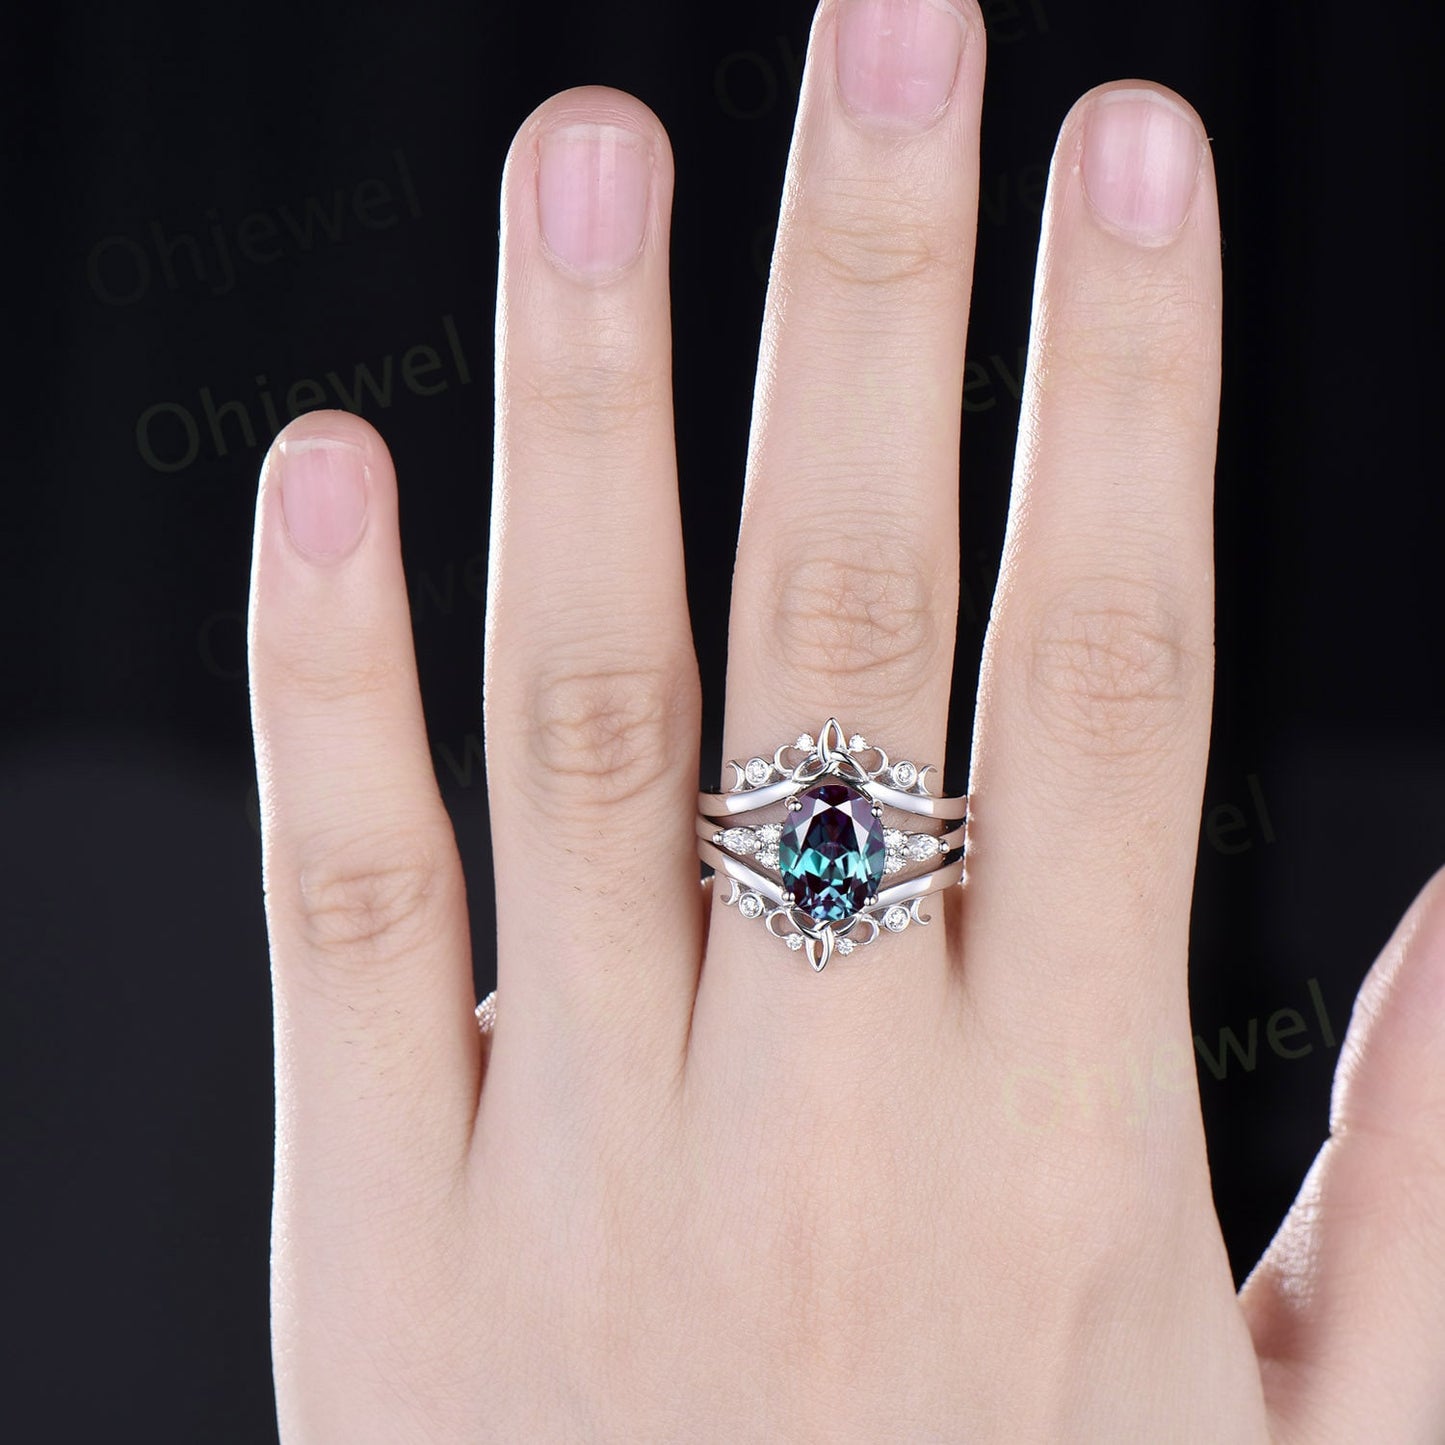 4ct oval cut Alexandrite engagement ring set solid 14k white gold art deco diamond ring vintage moon Celtic knot wedding ring set for women